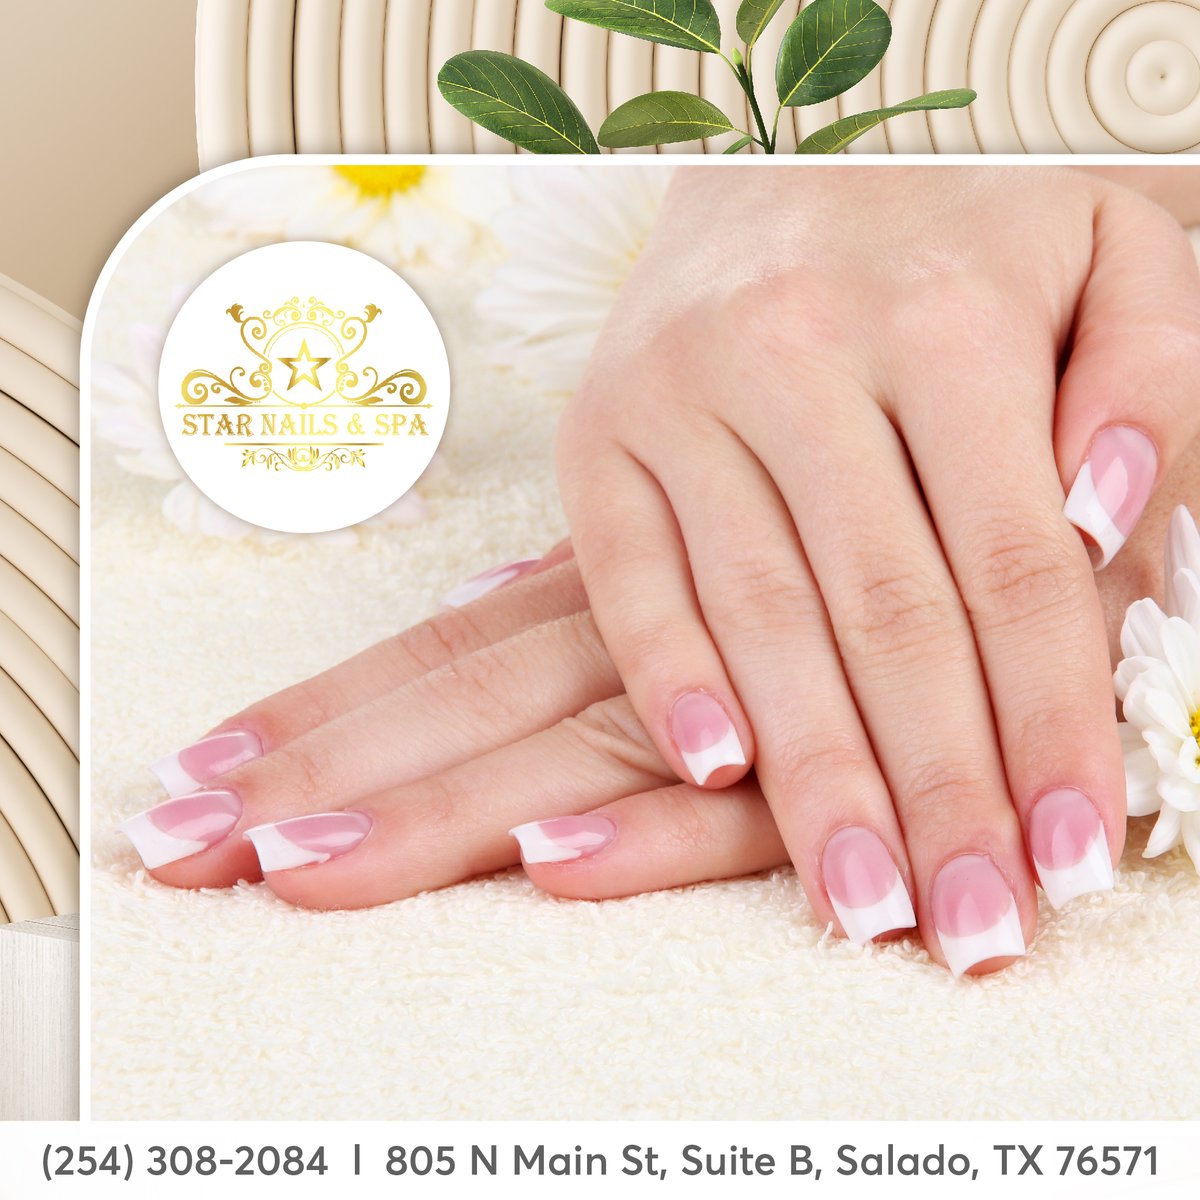 🥰Perfection at your fingertips – that's where true sophistication shines. ____________________________ 🌟Star Nails & Spa🌟 📞 (254) 308-2084 📍805 N Main St, Suite B, Salado, TX 76571 #nailsalon #nailsalons #besnailsalon #nailsoftheday #nail #instanails #beauty #nailsdesign